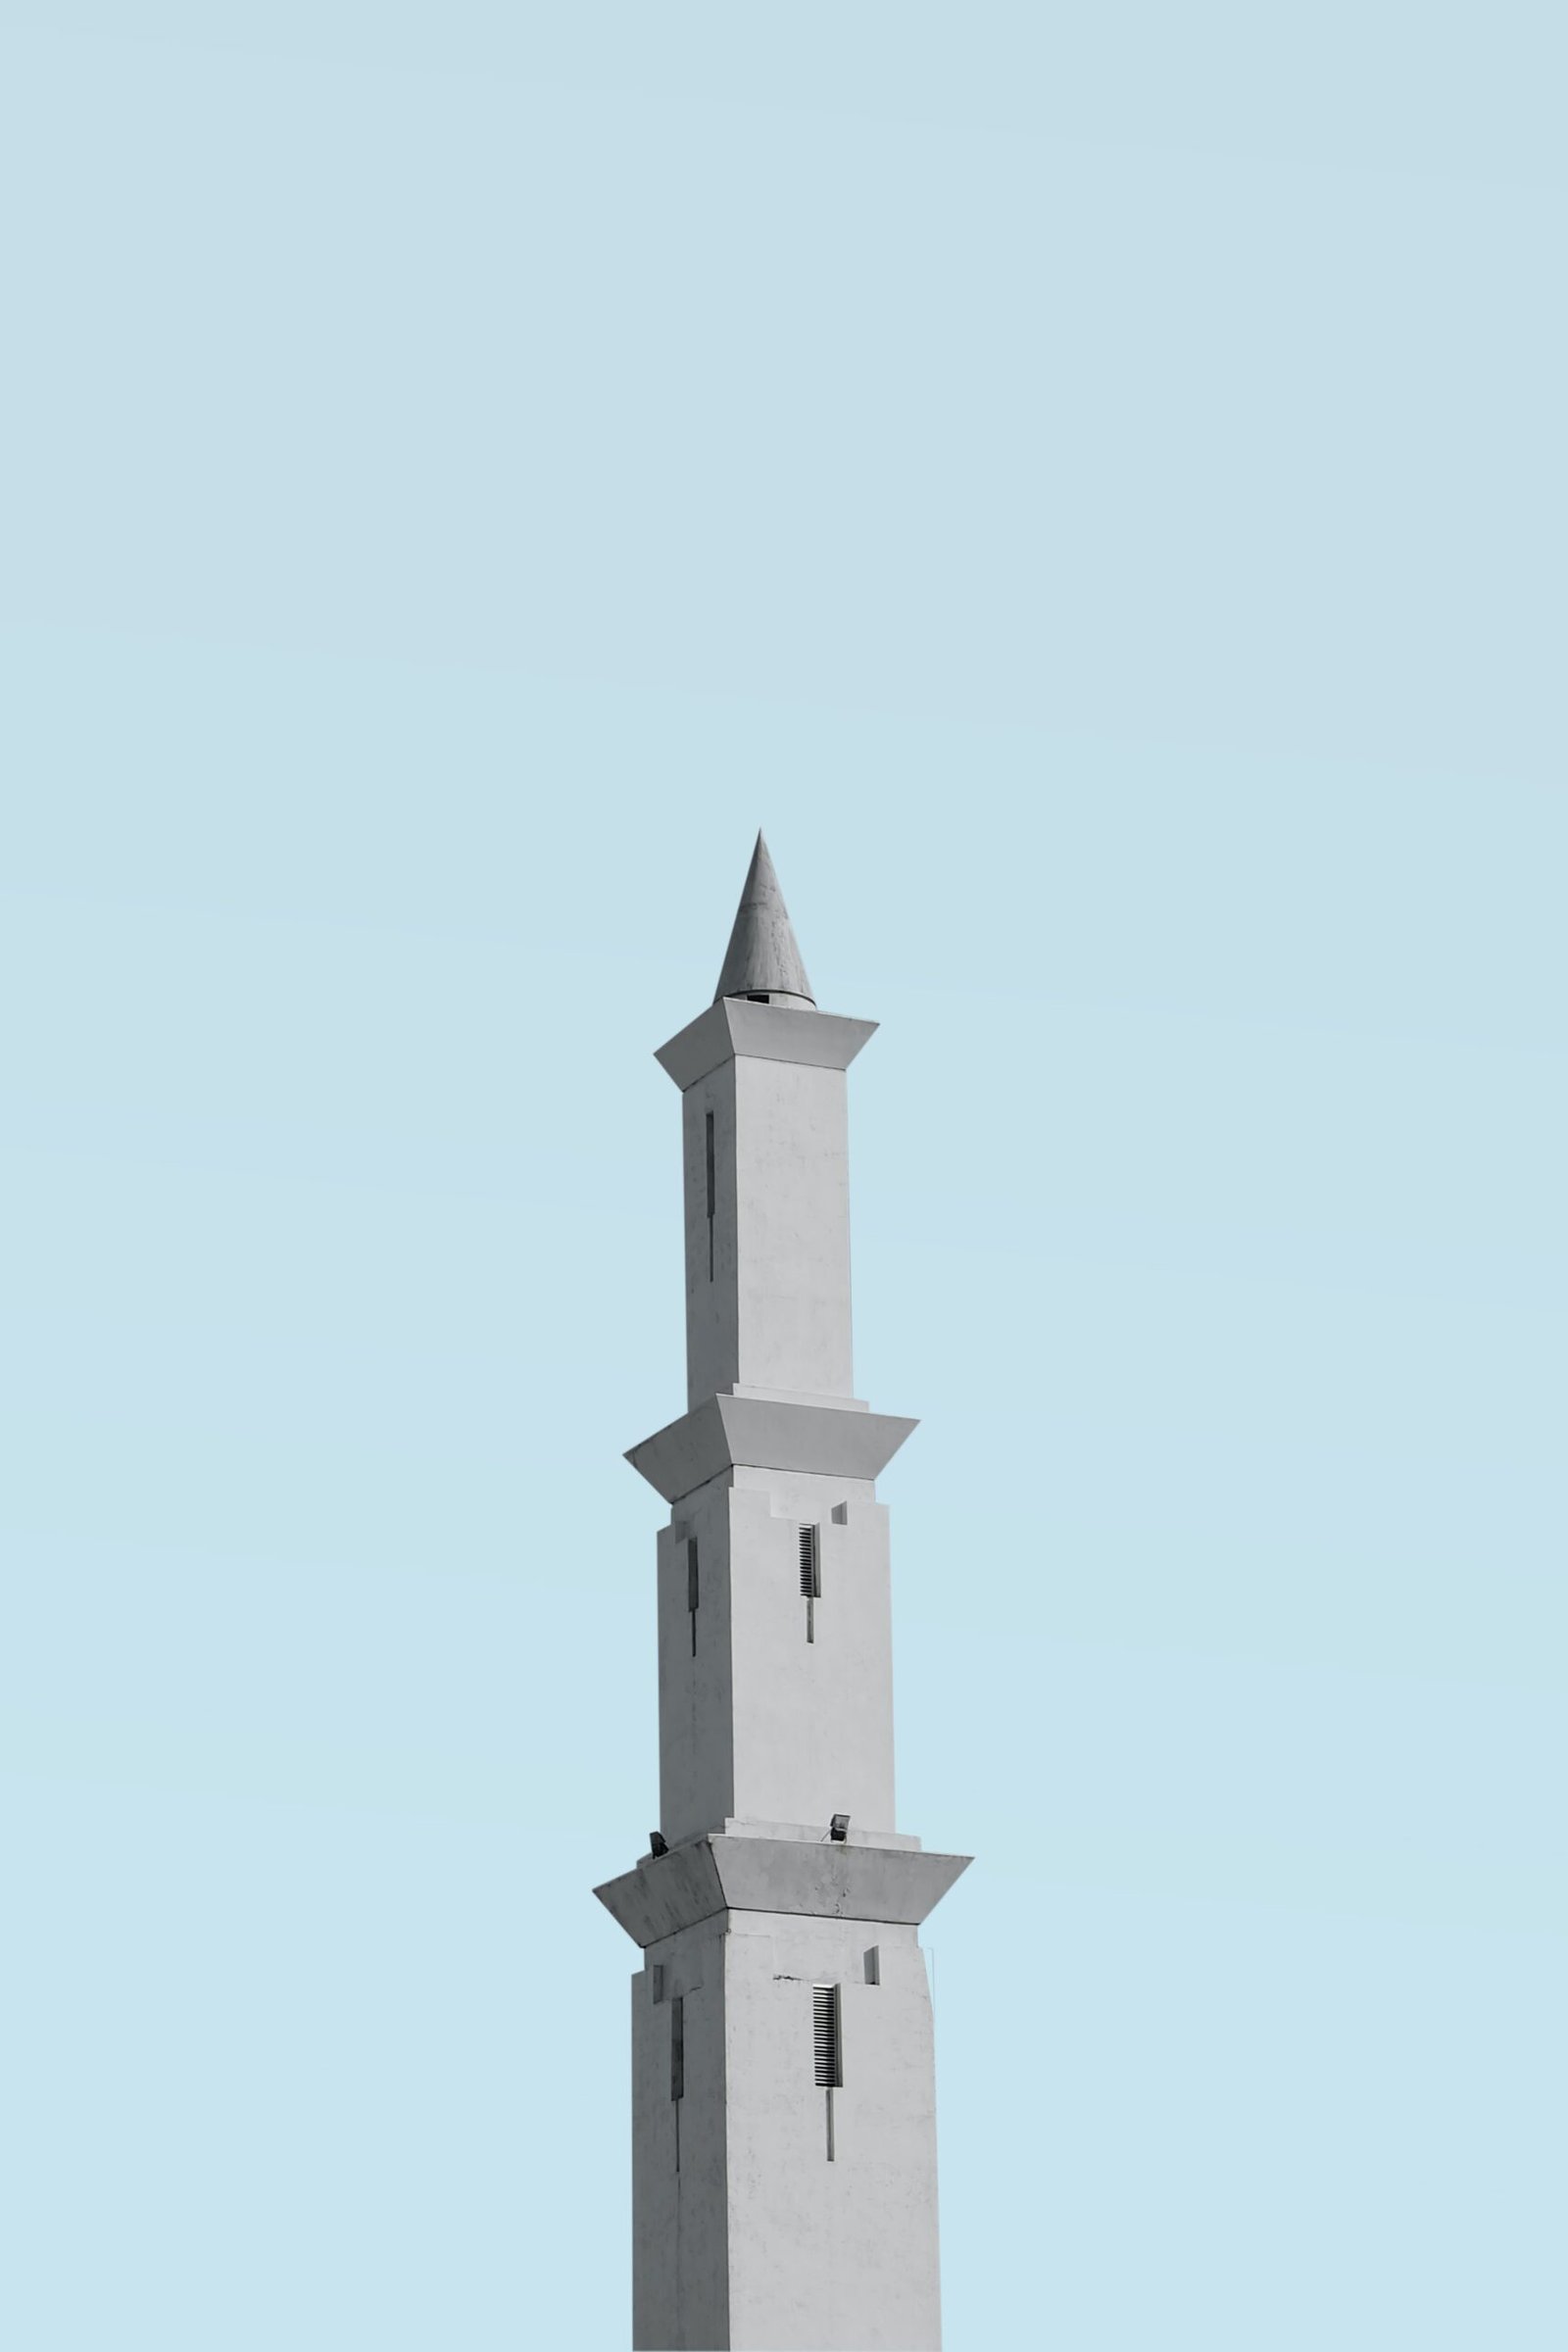 gray concrete tower